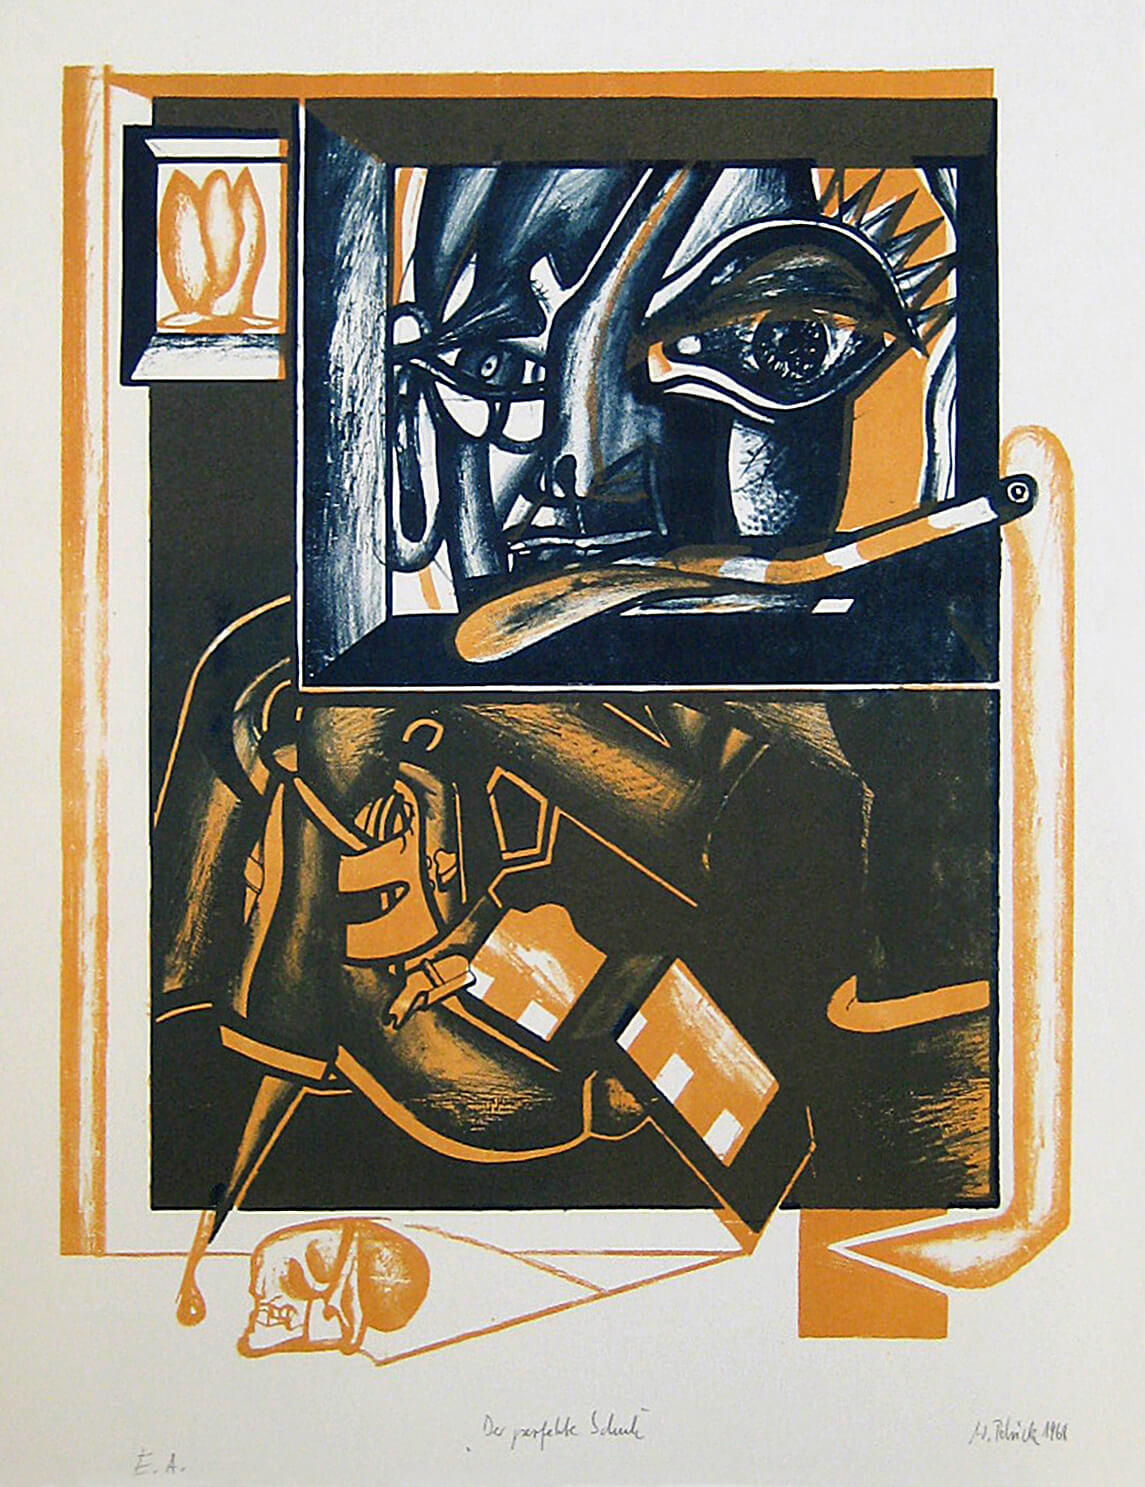 Wolfgang Petrick, Der perfekte Schuh, 1968, Lithographie, Auflage: 100, 70 x 50 cm